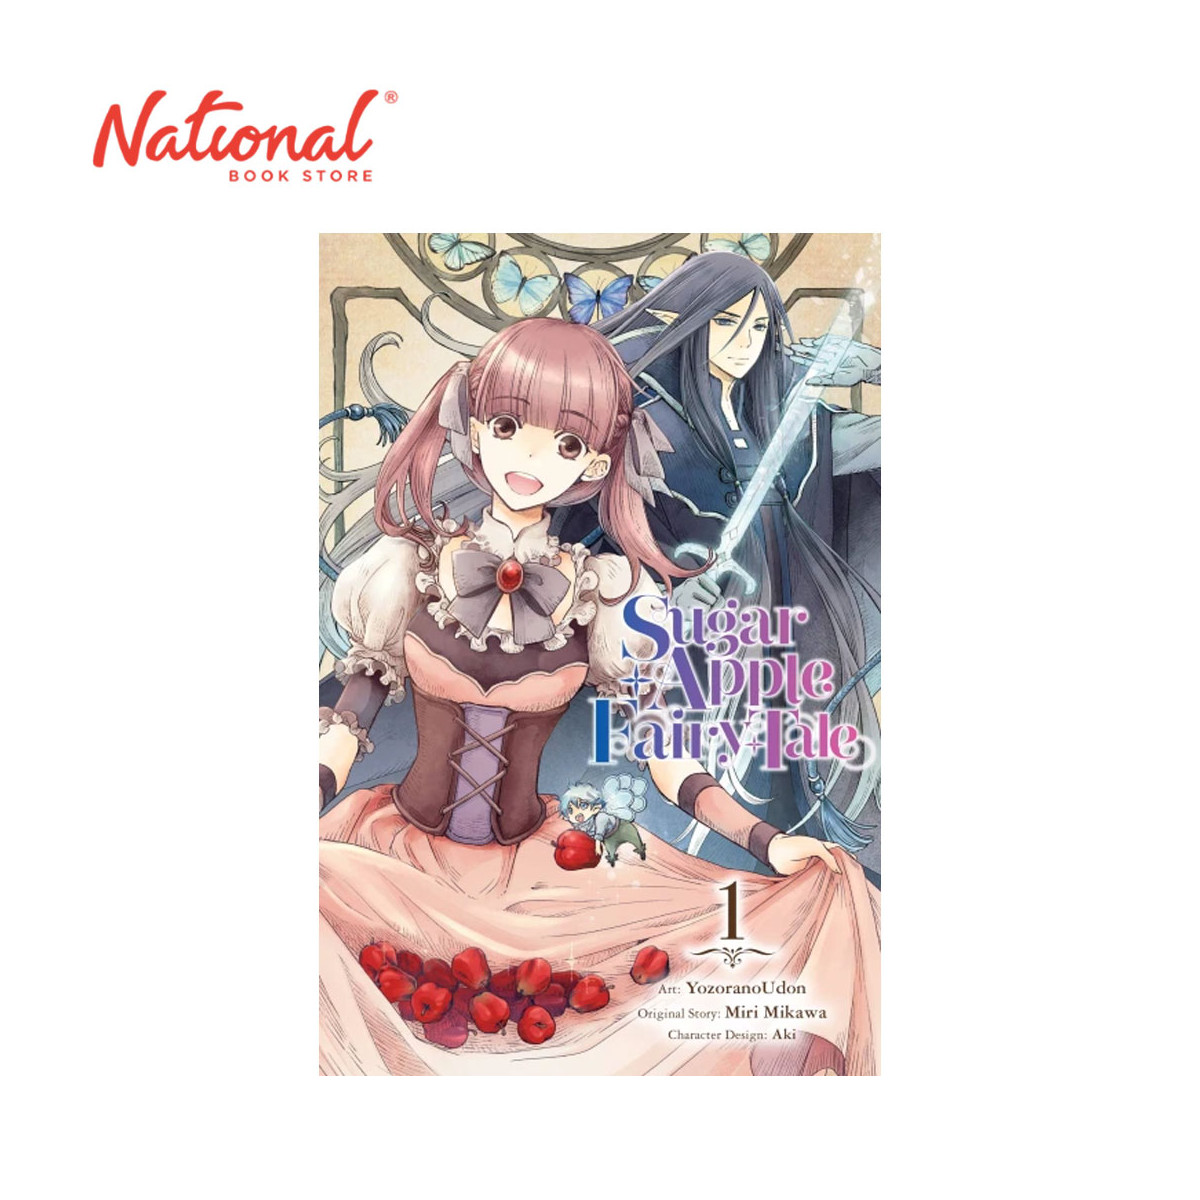 Sugar Apple Fairy Tale, Volume 1 (Manga) by Yozoranoudon - Trade Paperback - Teens Fiction - Manga